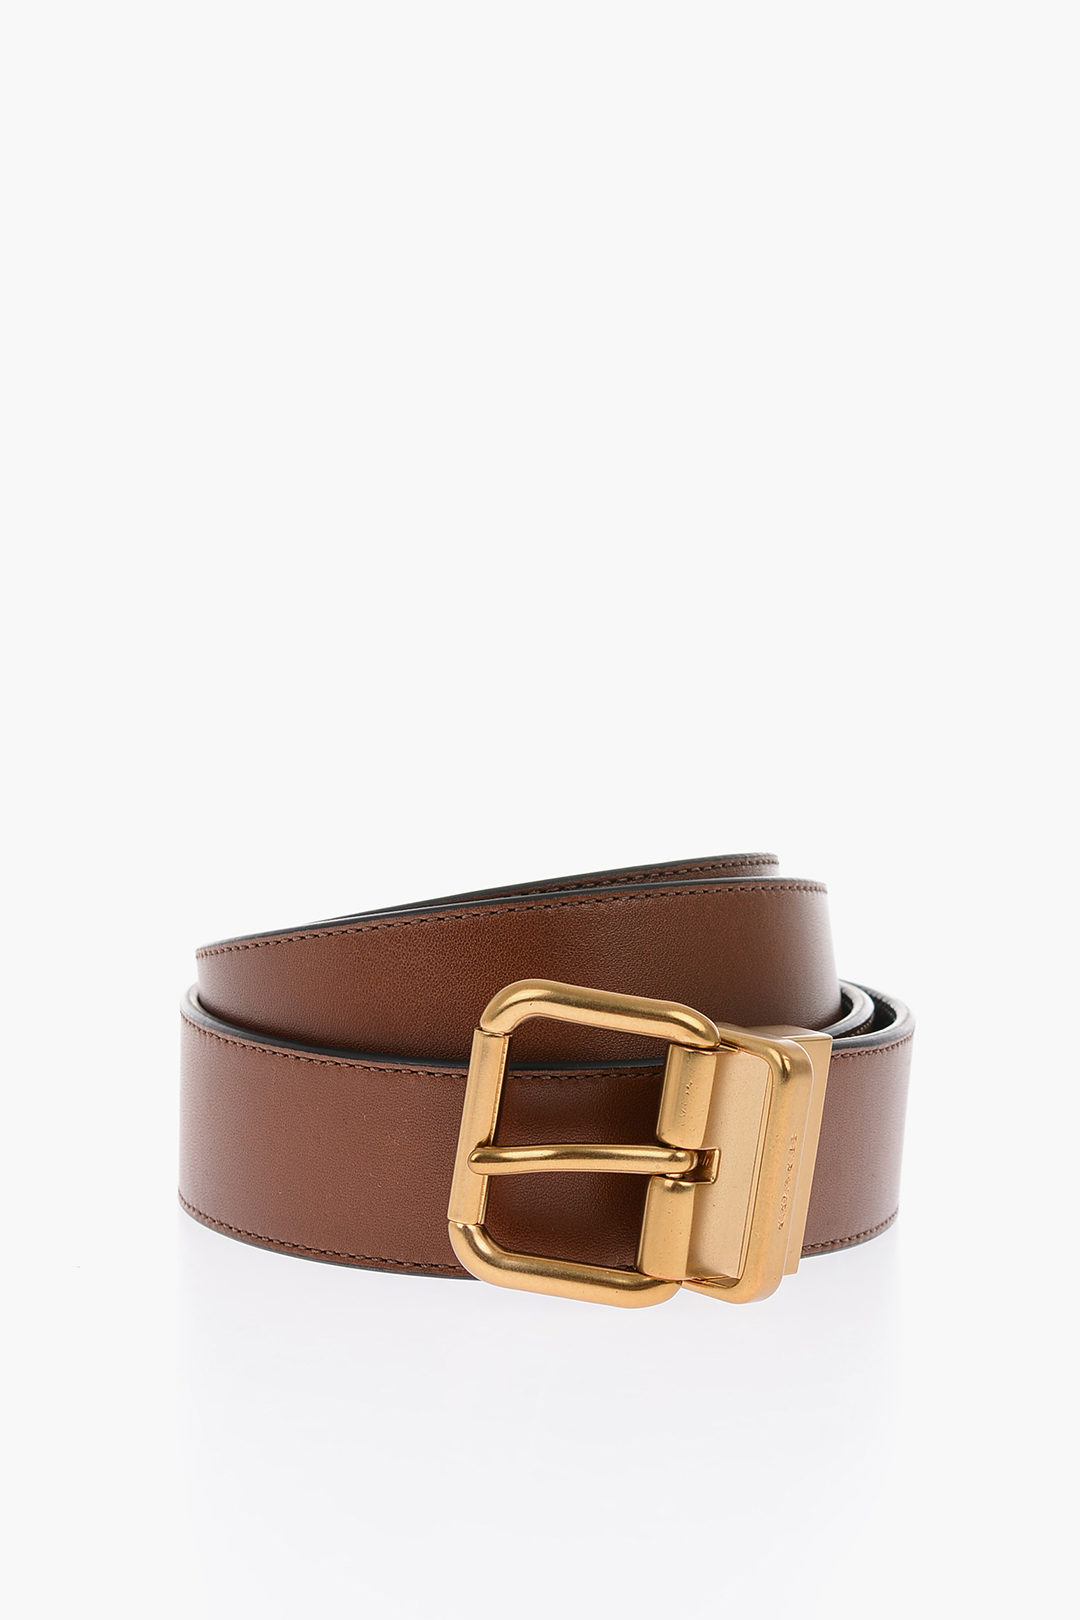 Coach 40mm reversible leather belt men - Glamood Outlet